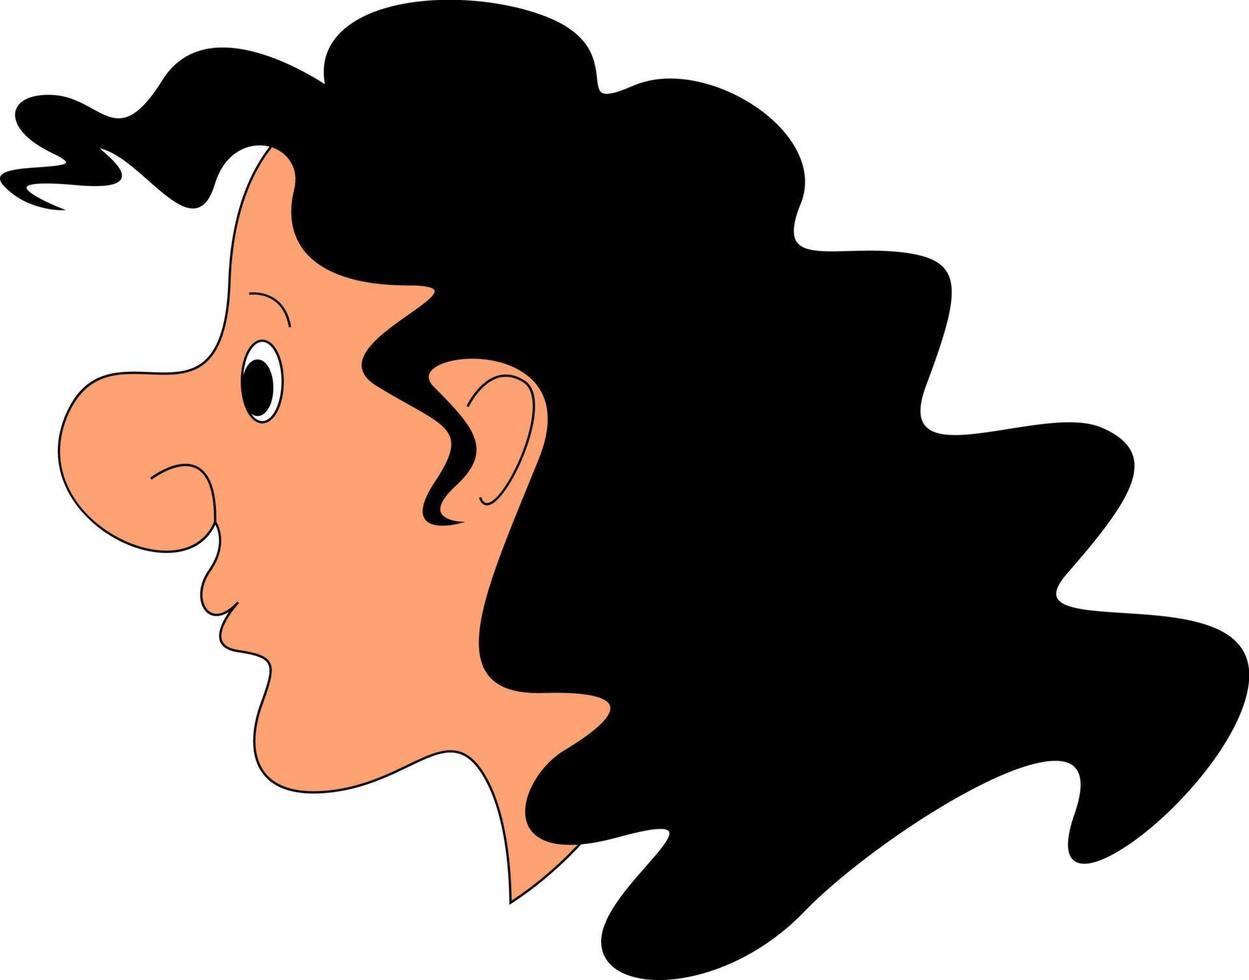 Wavy hair, illustration, vector on white background.